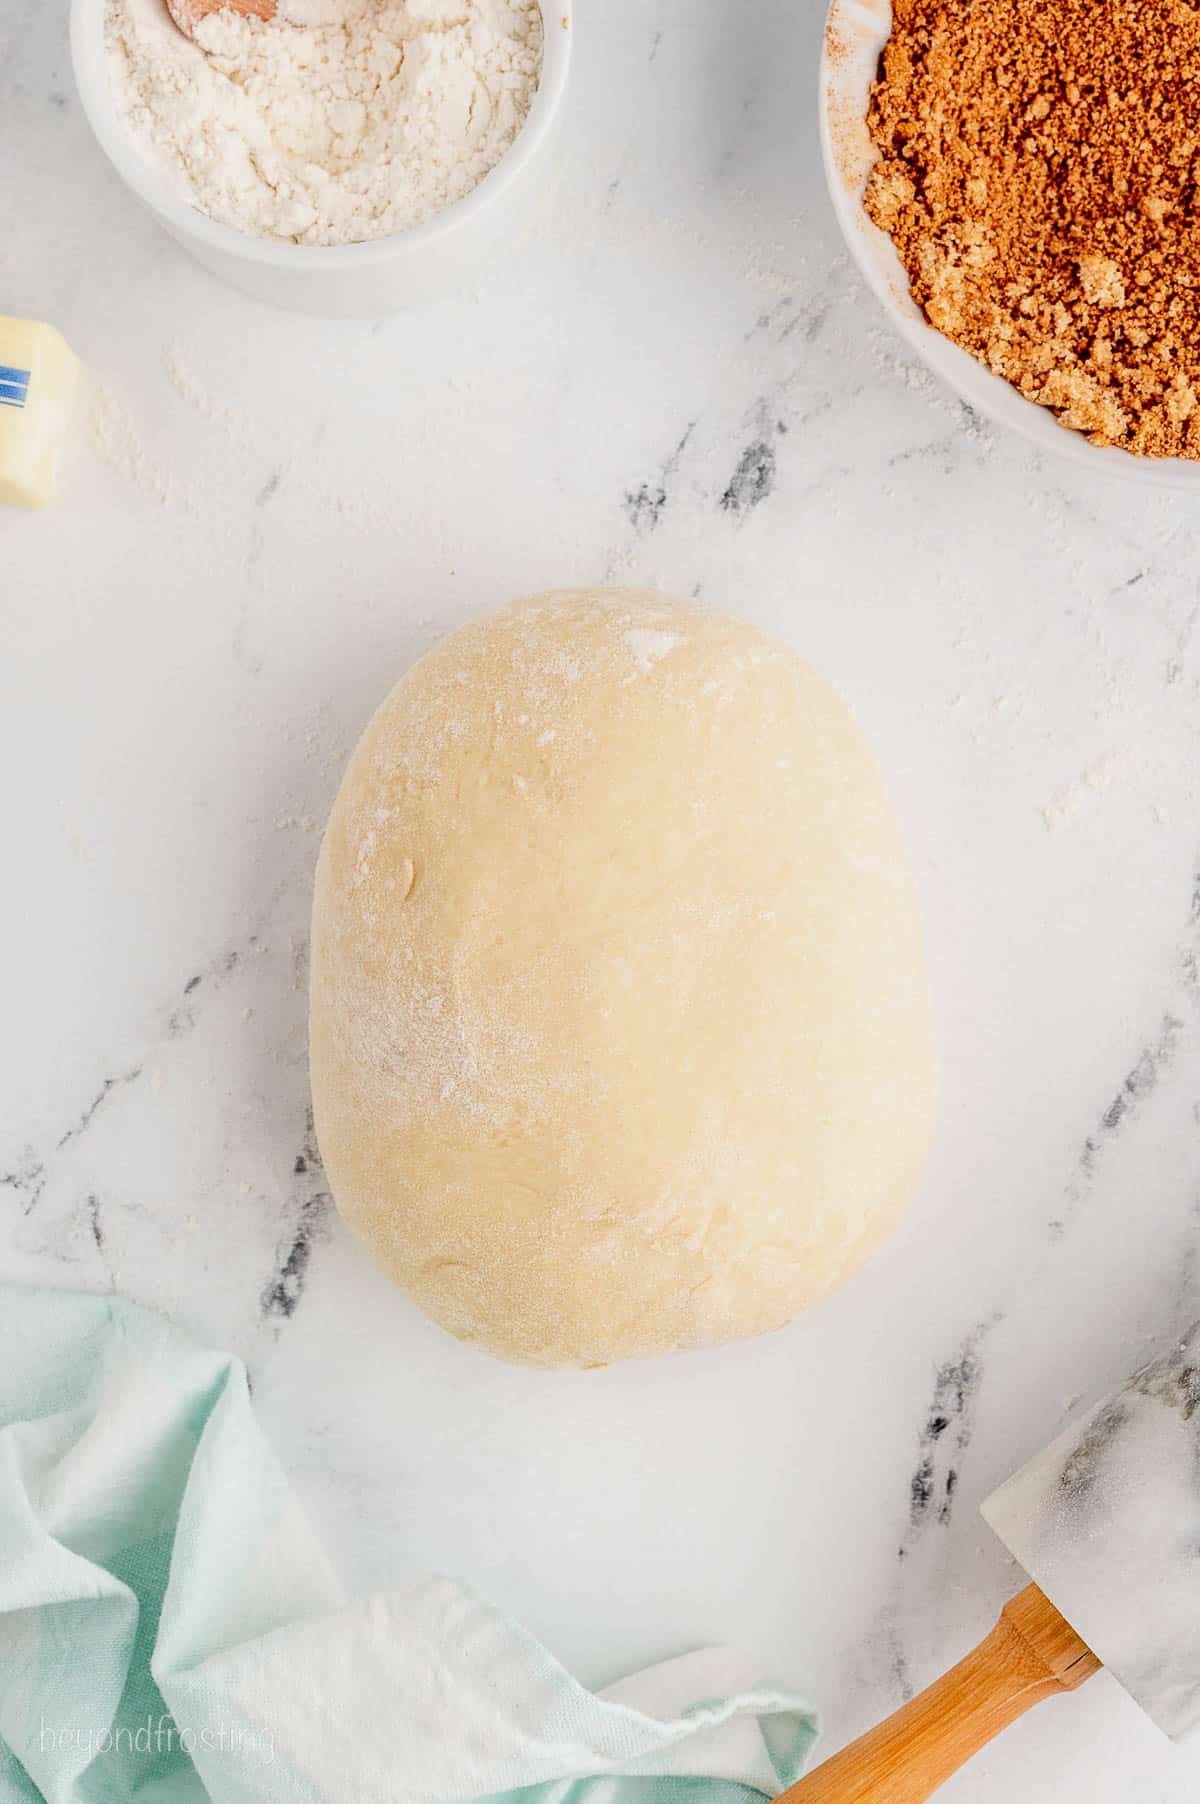 A ball of cinnamon roll dough on a countertop next to a bowl of cinnamon sugar.